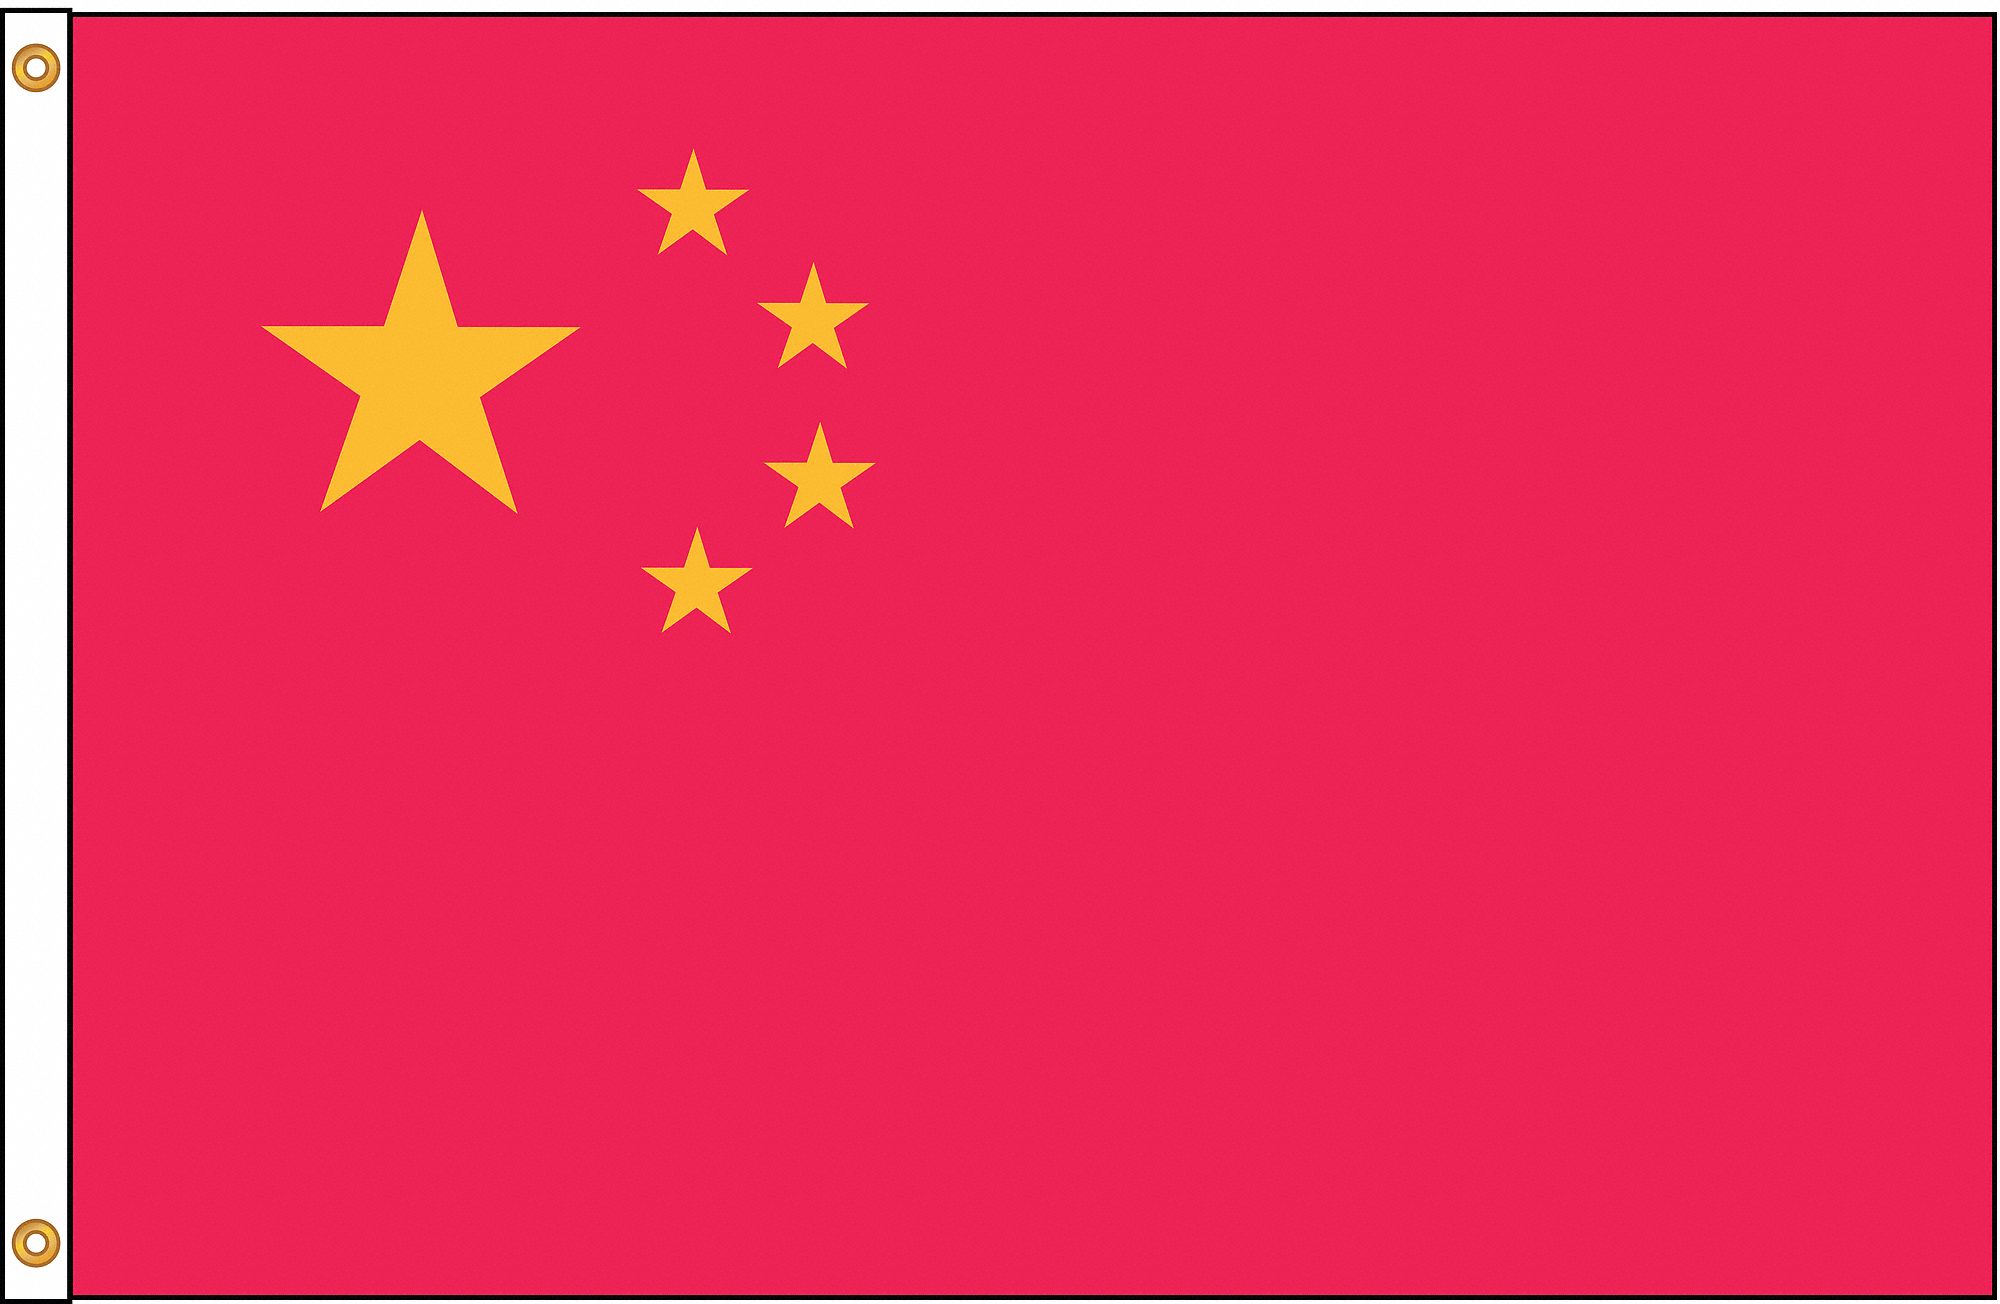 5JFV4 - China Flag 3x5 Ft Nylon